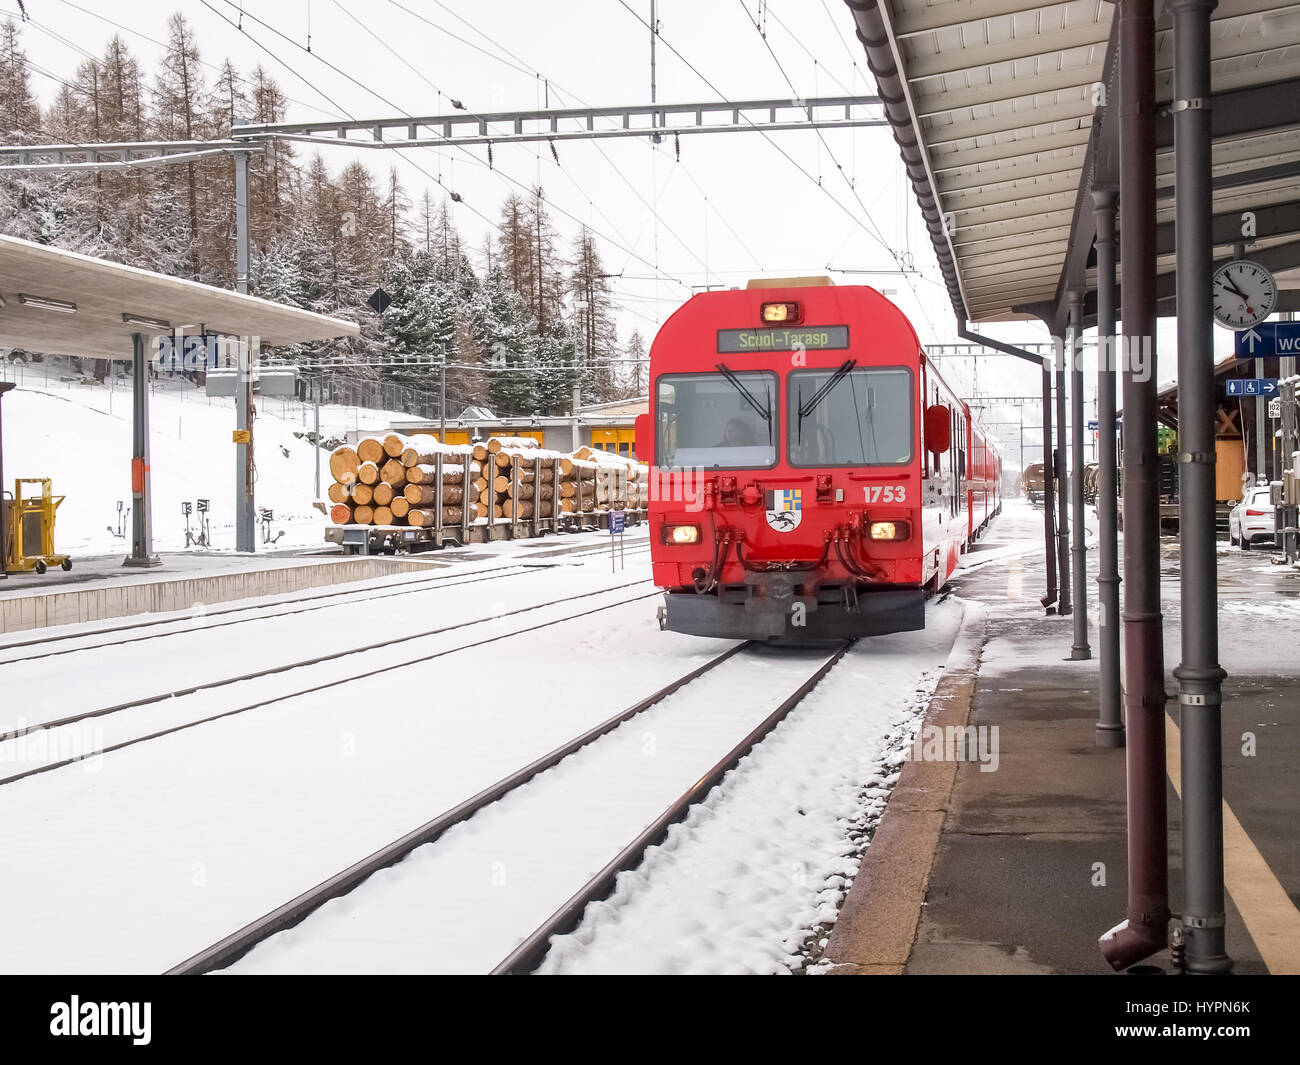 Poschiavo, Switzerland - April 27, 2016: Train of the Rhaetian Railway in transit at the Poschiavo station during a snowy day. Stock Photo